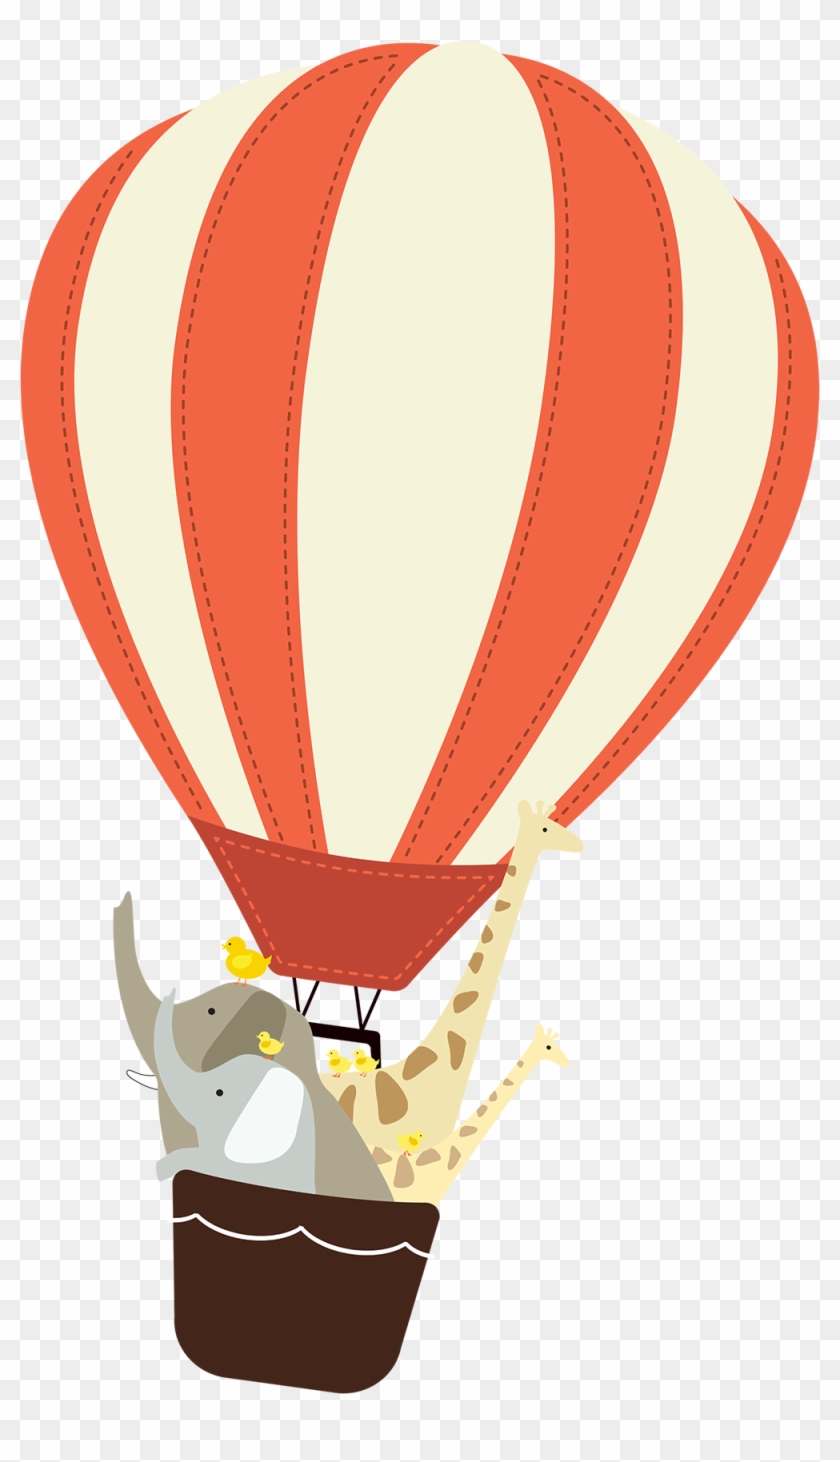 Register For Prenatal Classes - Hot Air Balloon #275065